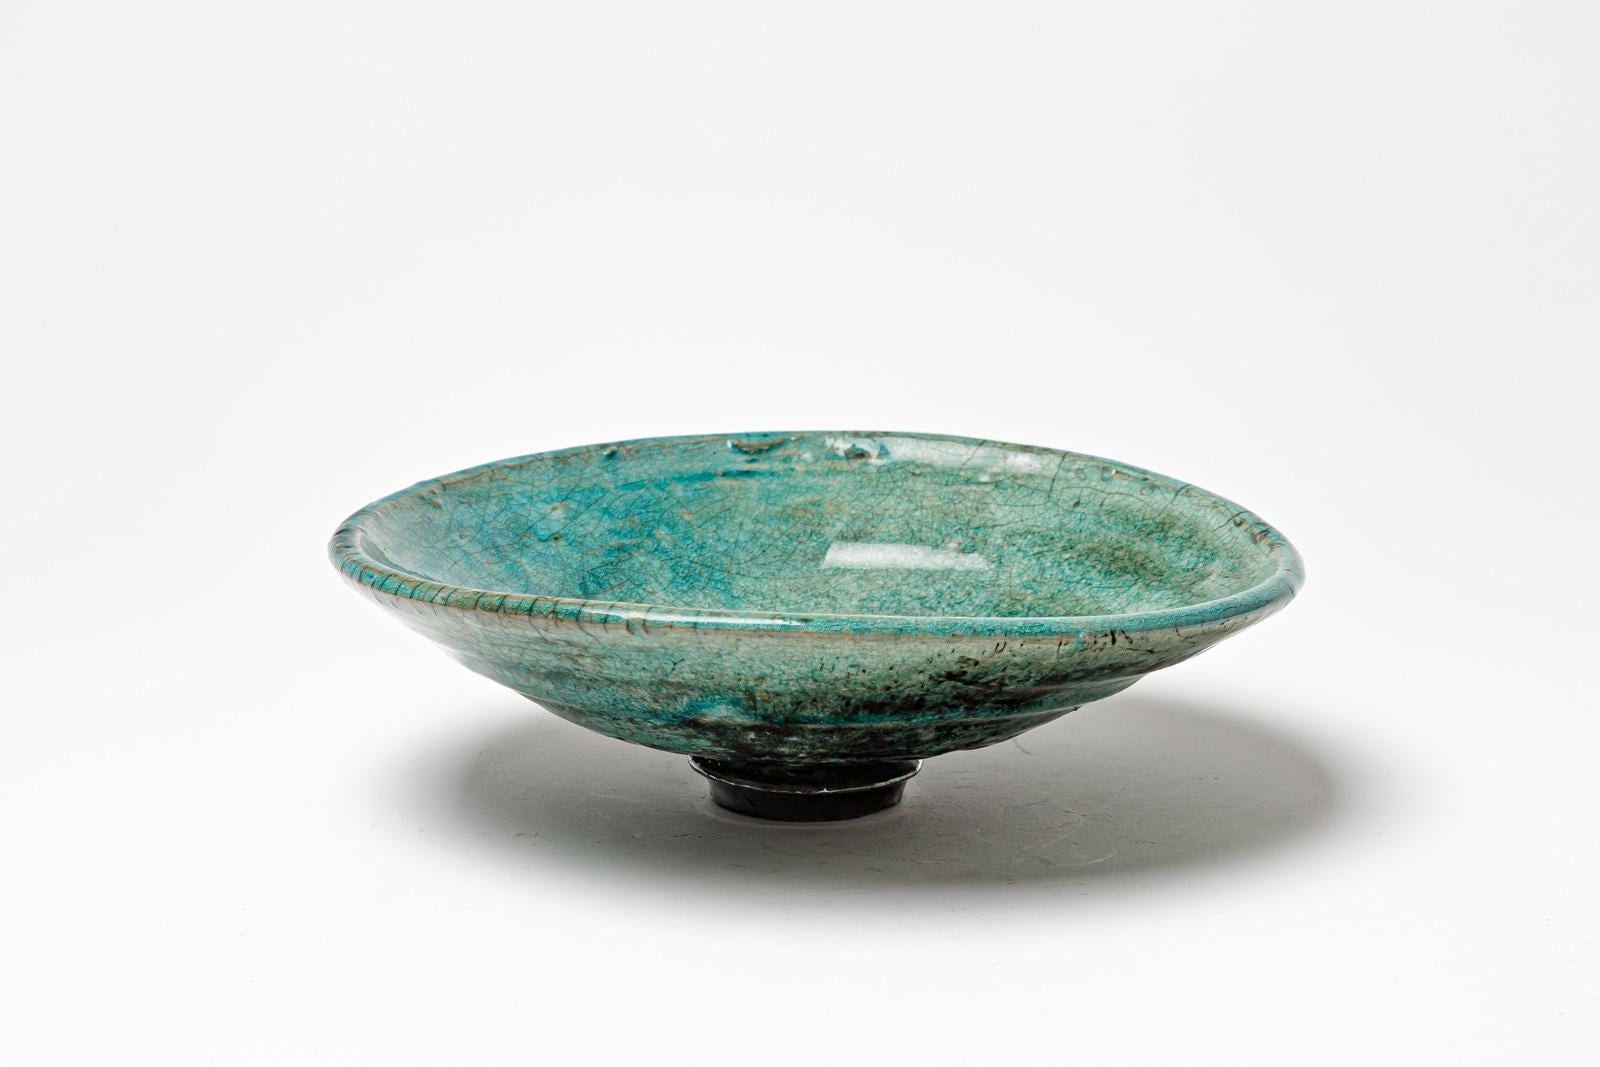 Beaux Arts Green/blue glazed ceramic cup by Gisèle Buthod Garçon, circa 1980-1990 For Sale